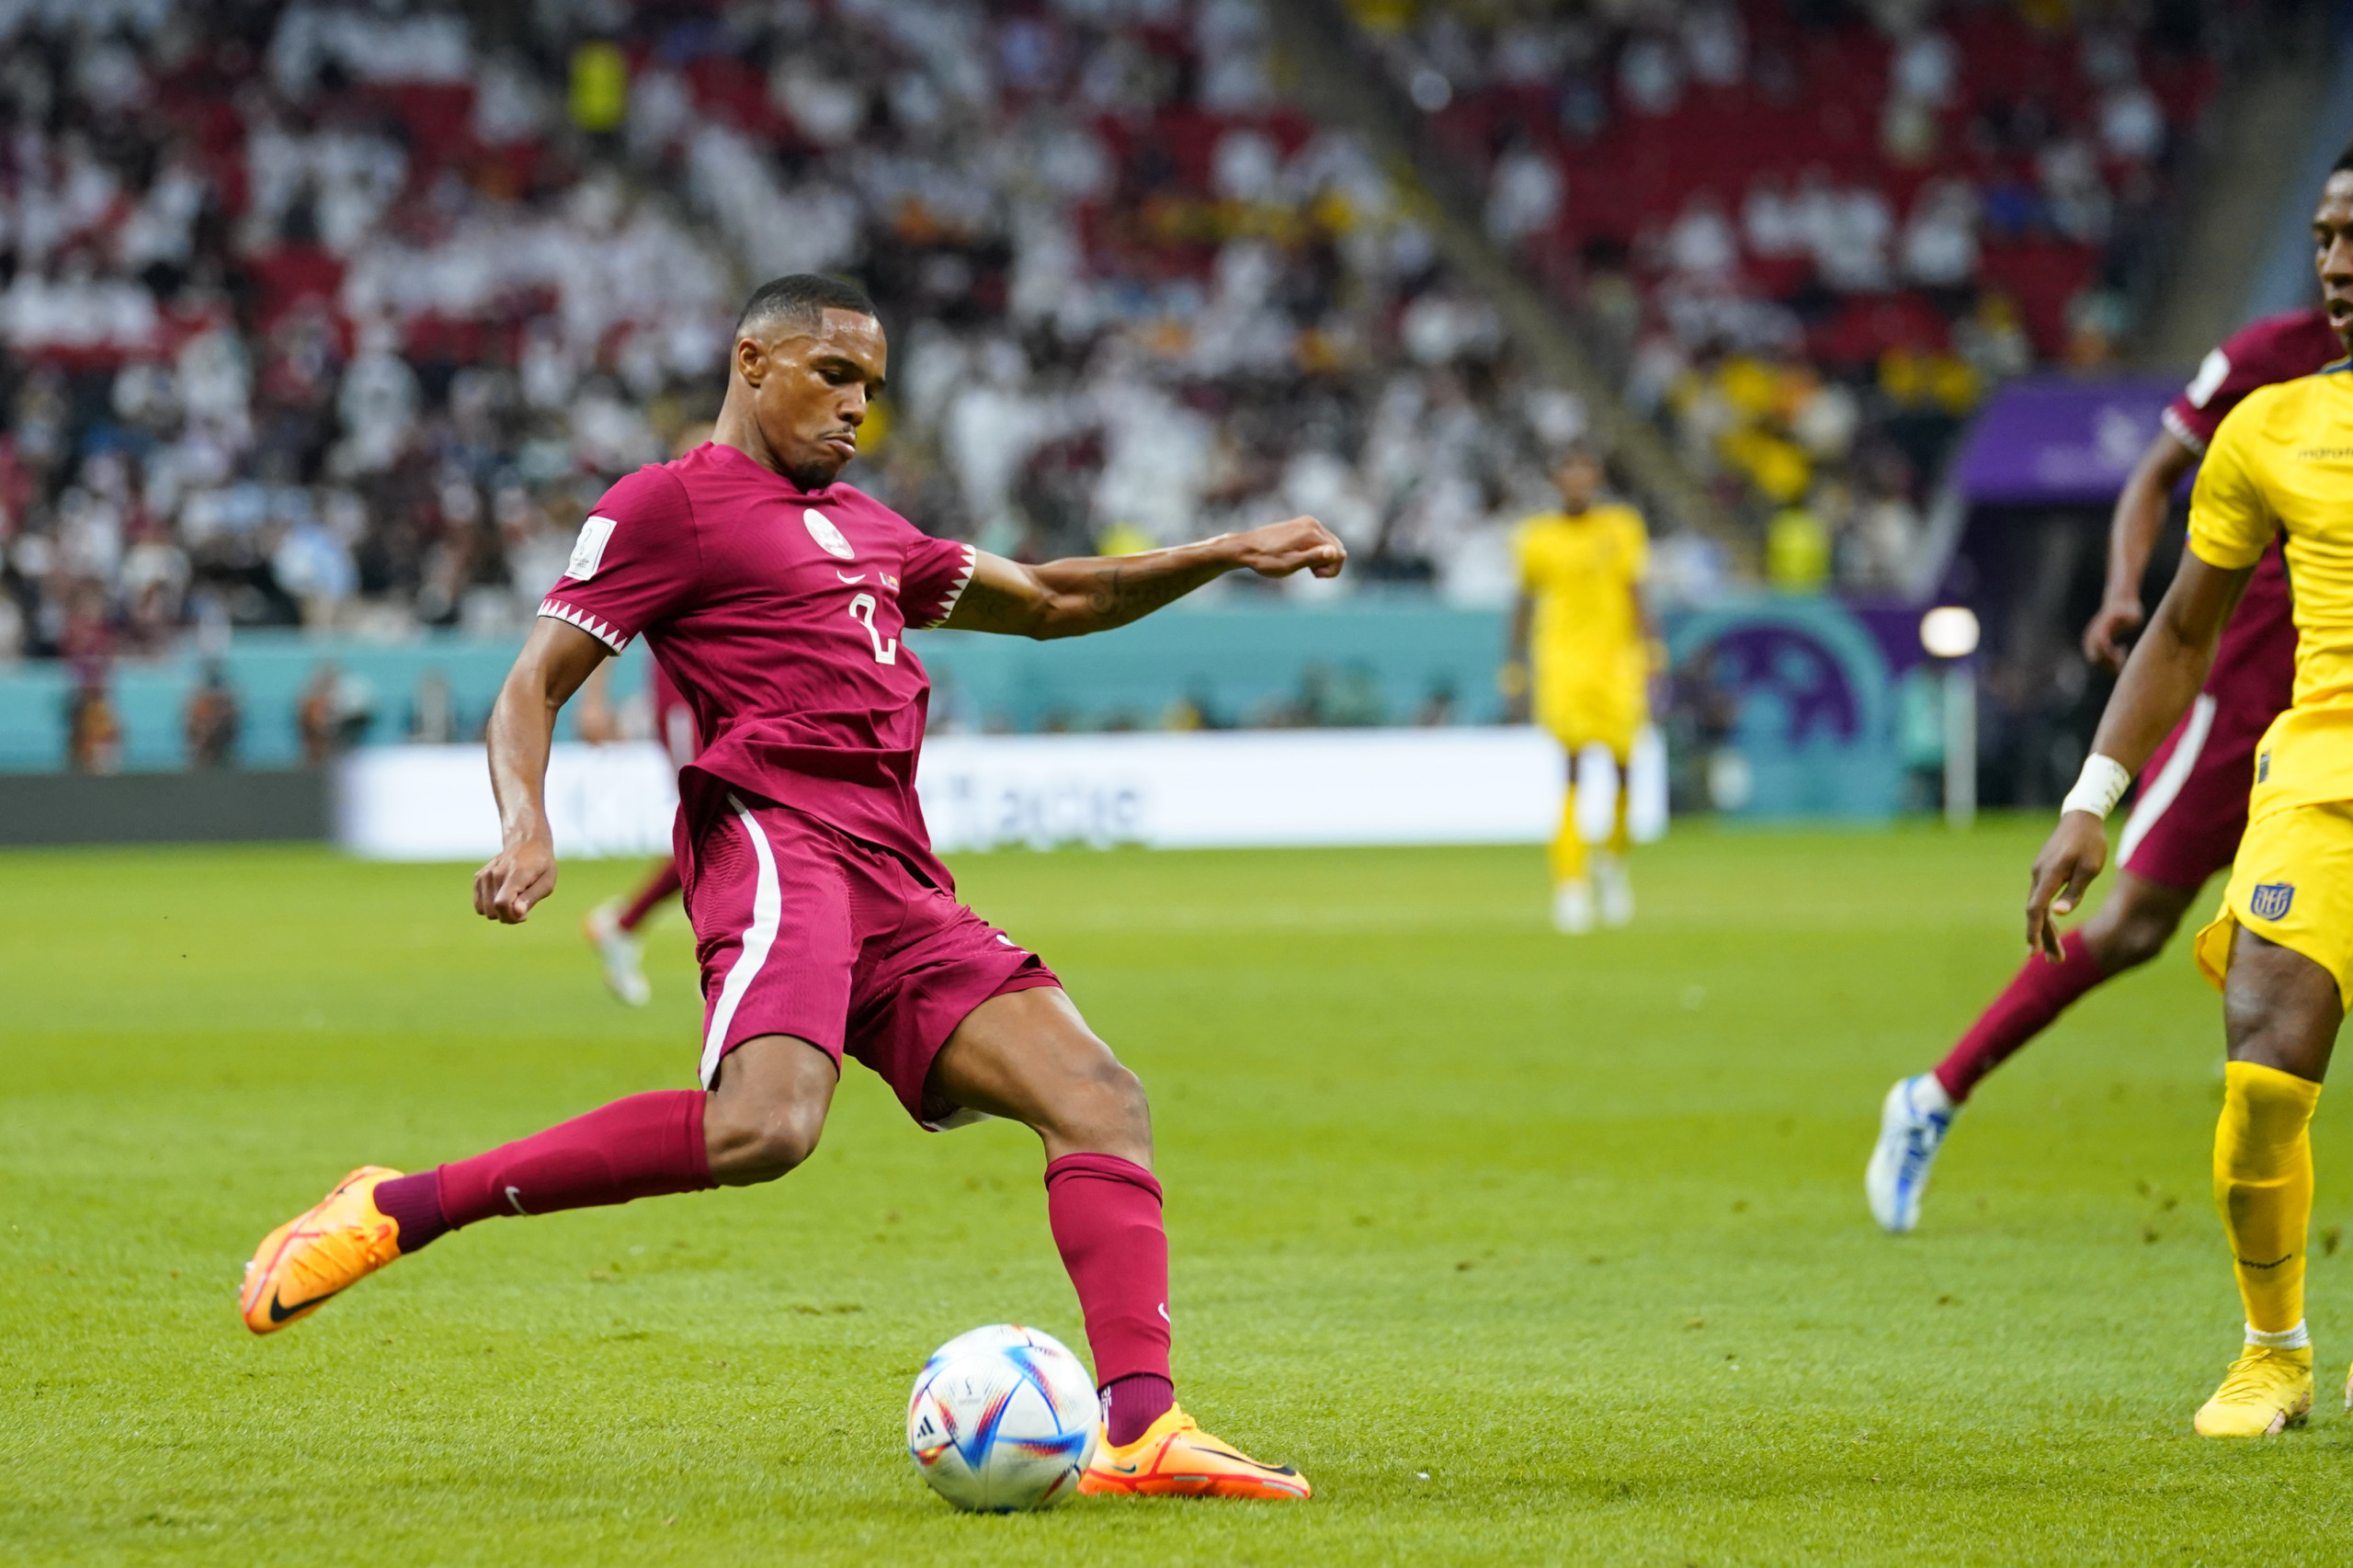 Qatar national team player attempts cross against Ecuador during World Cup match